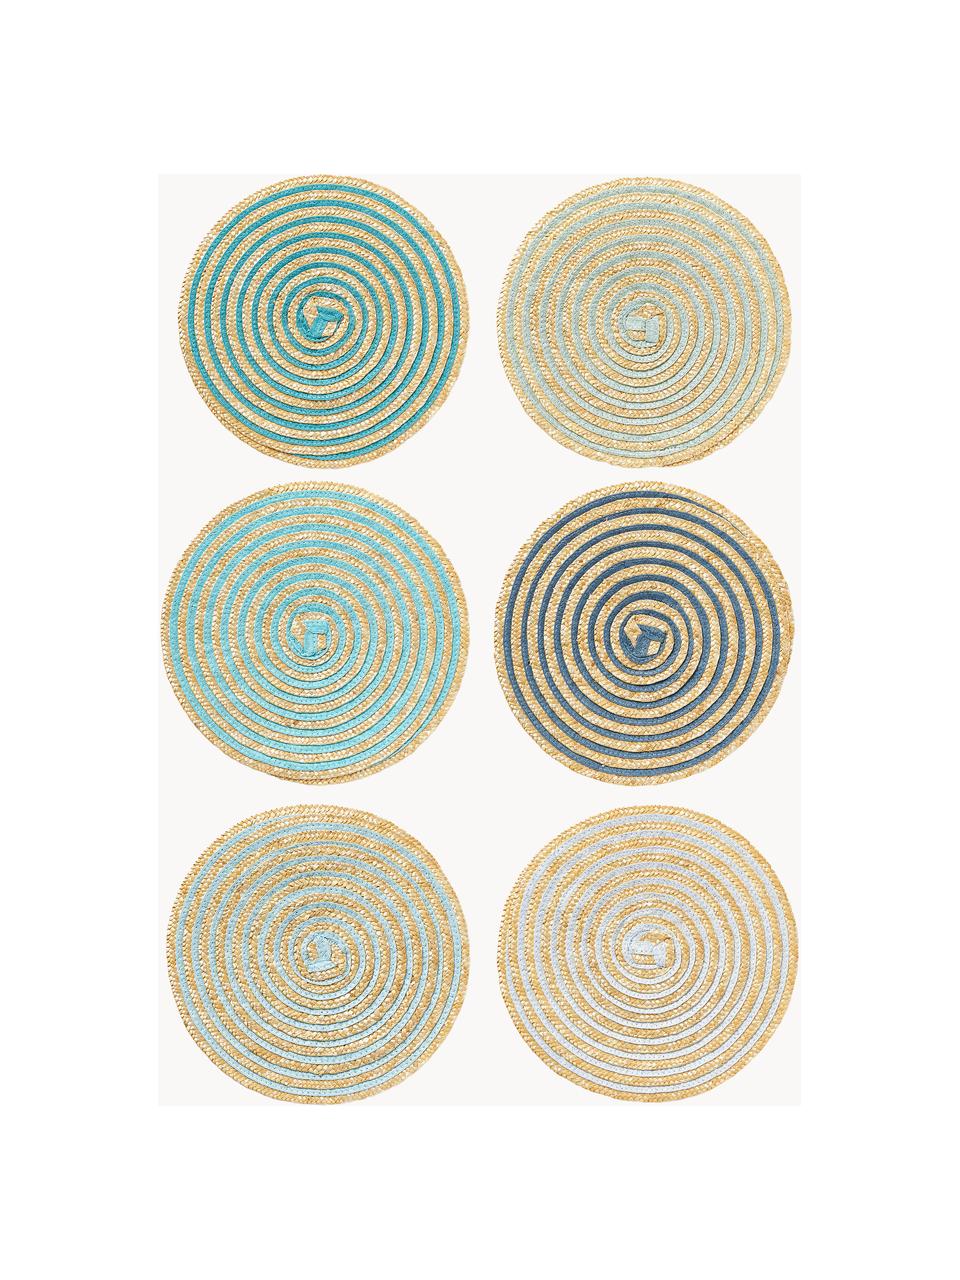 Manteles individuales redondos Baita, 6 uds., Rafia, Beige, tonos azules y verdes, Ø 39 cm